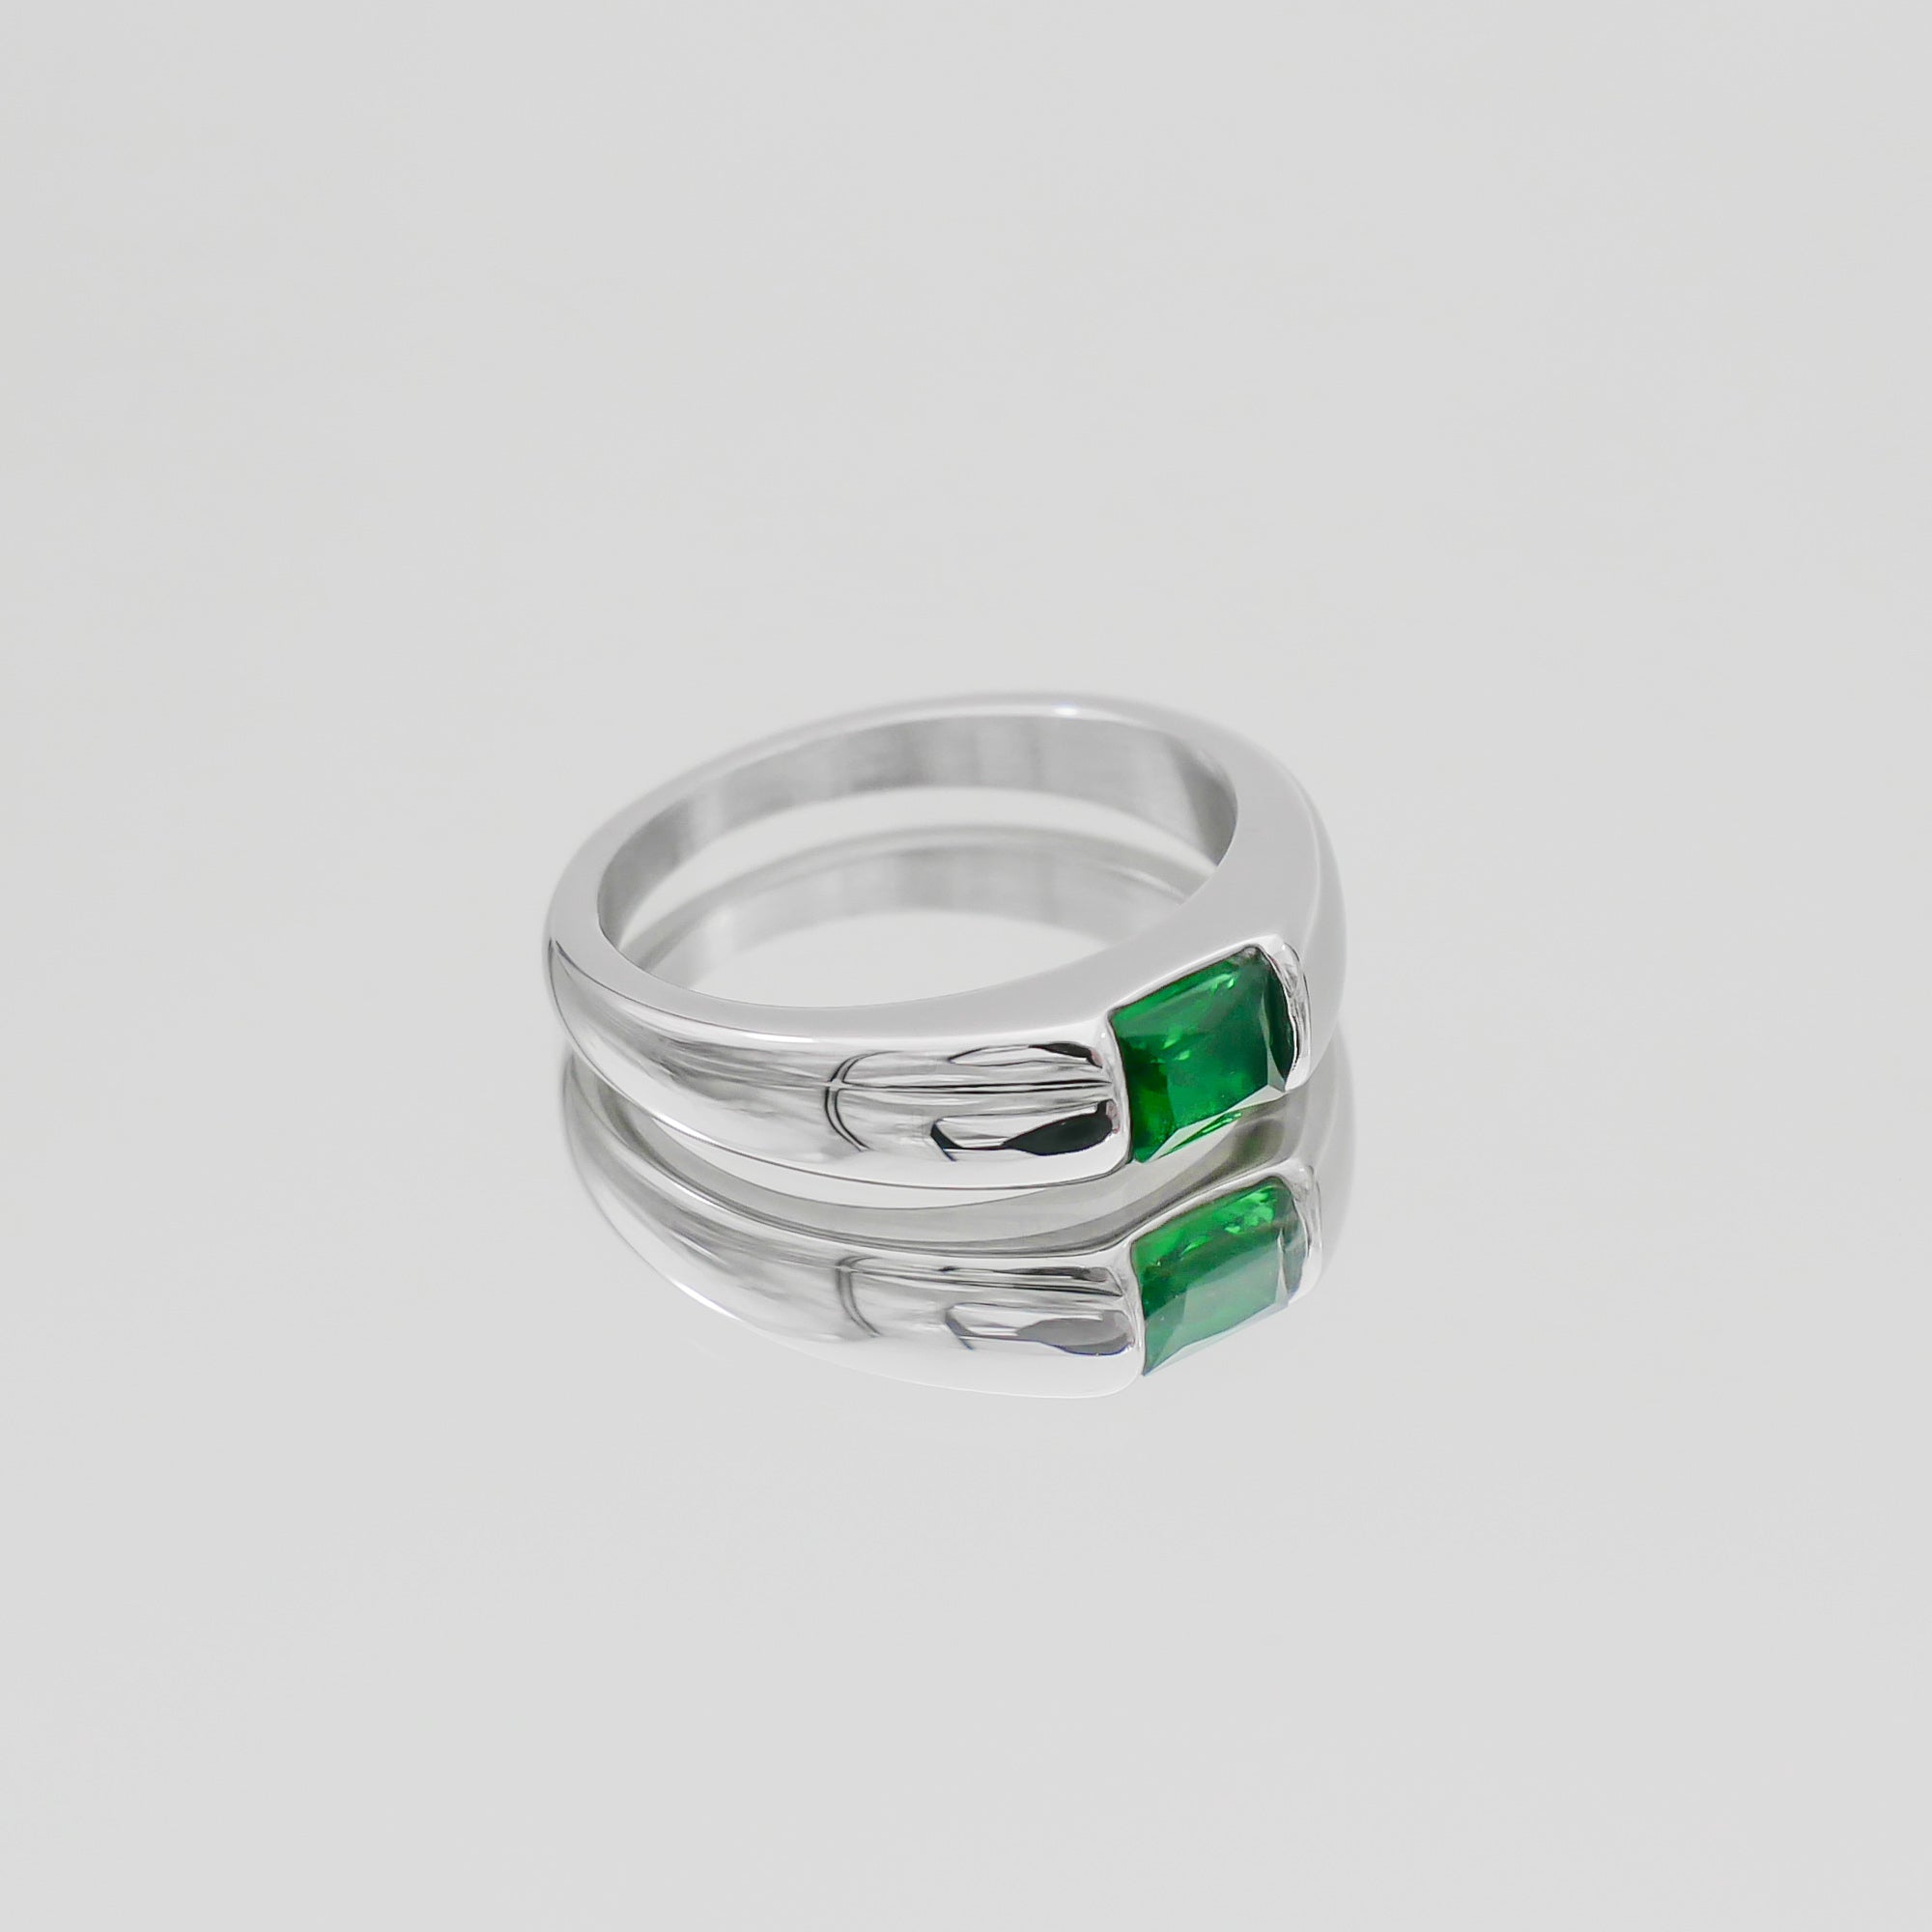 Silver Nova Band Ring with Emerald Gemstone by PRYA